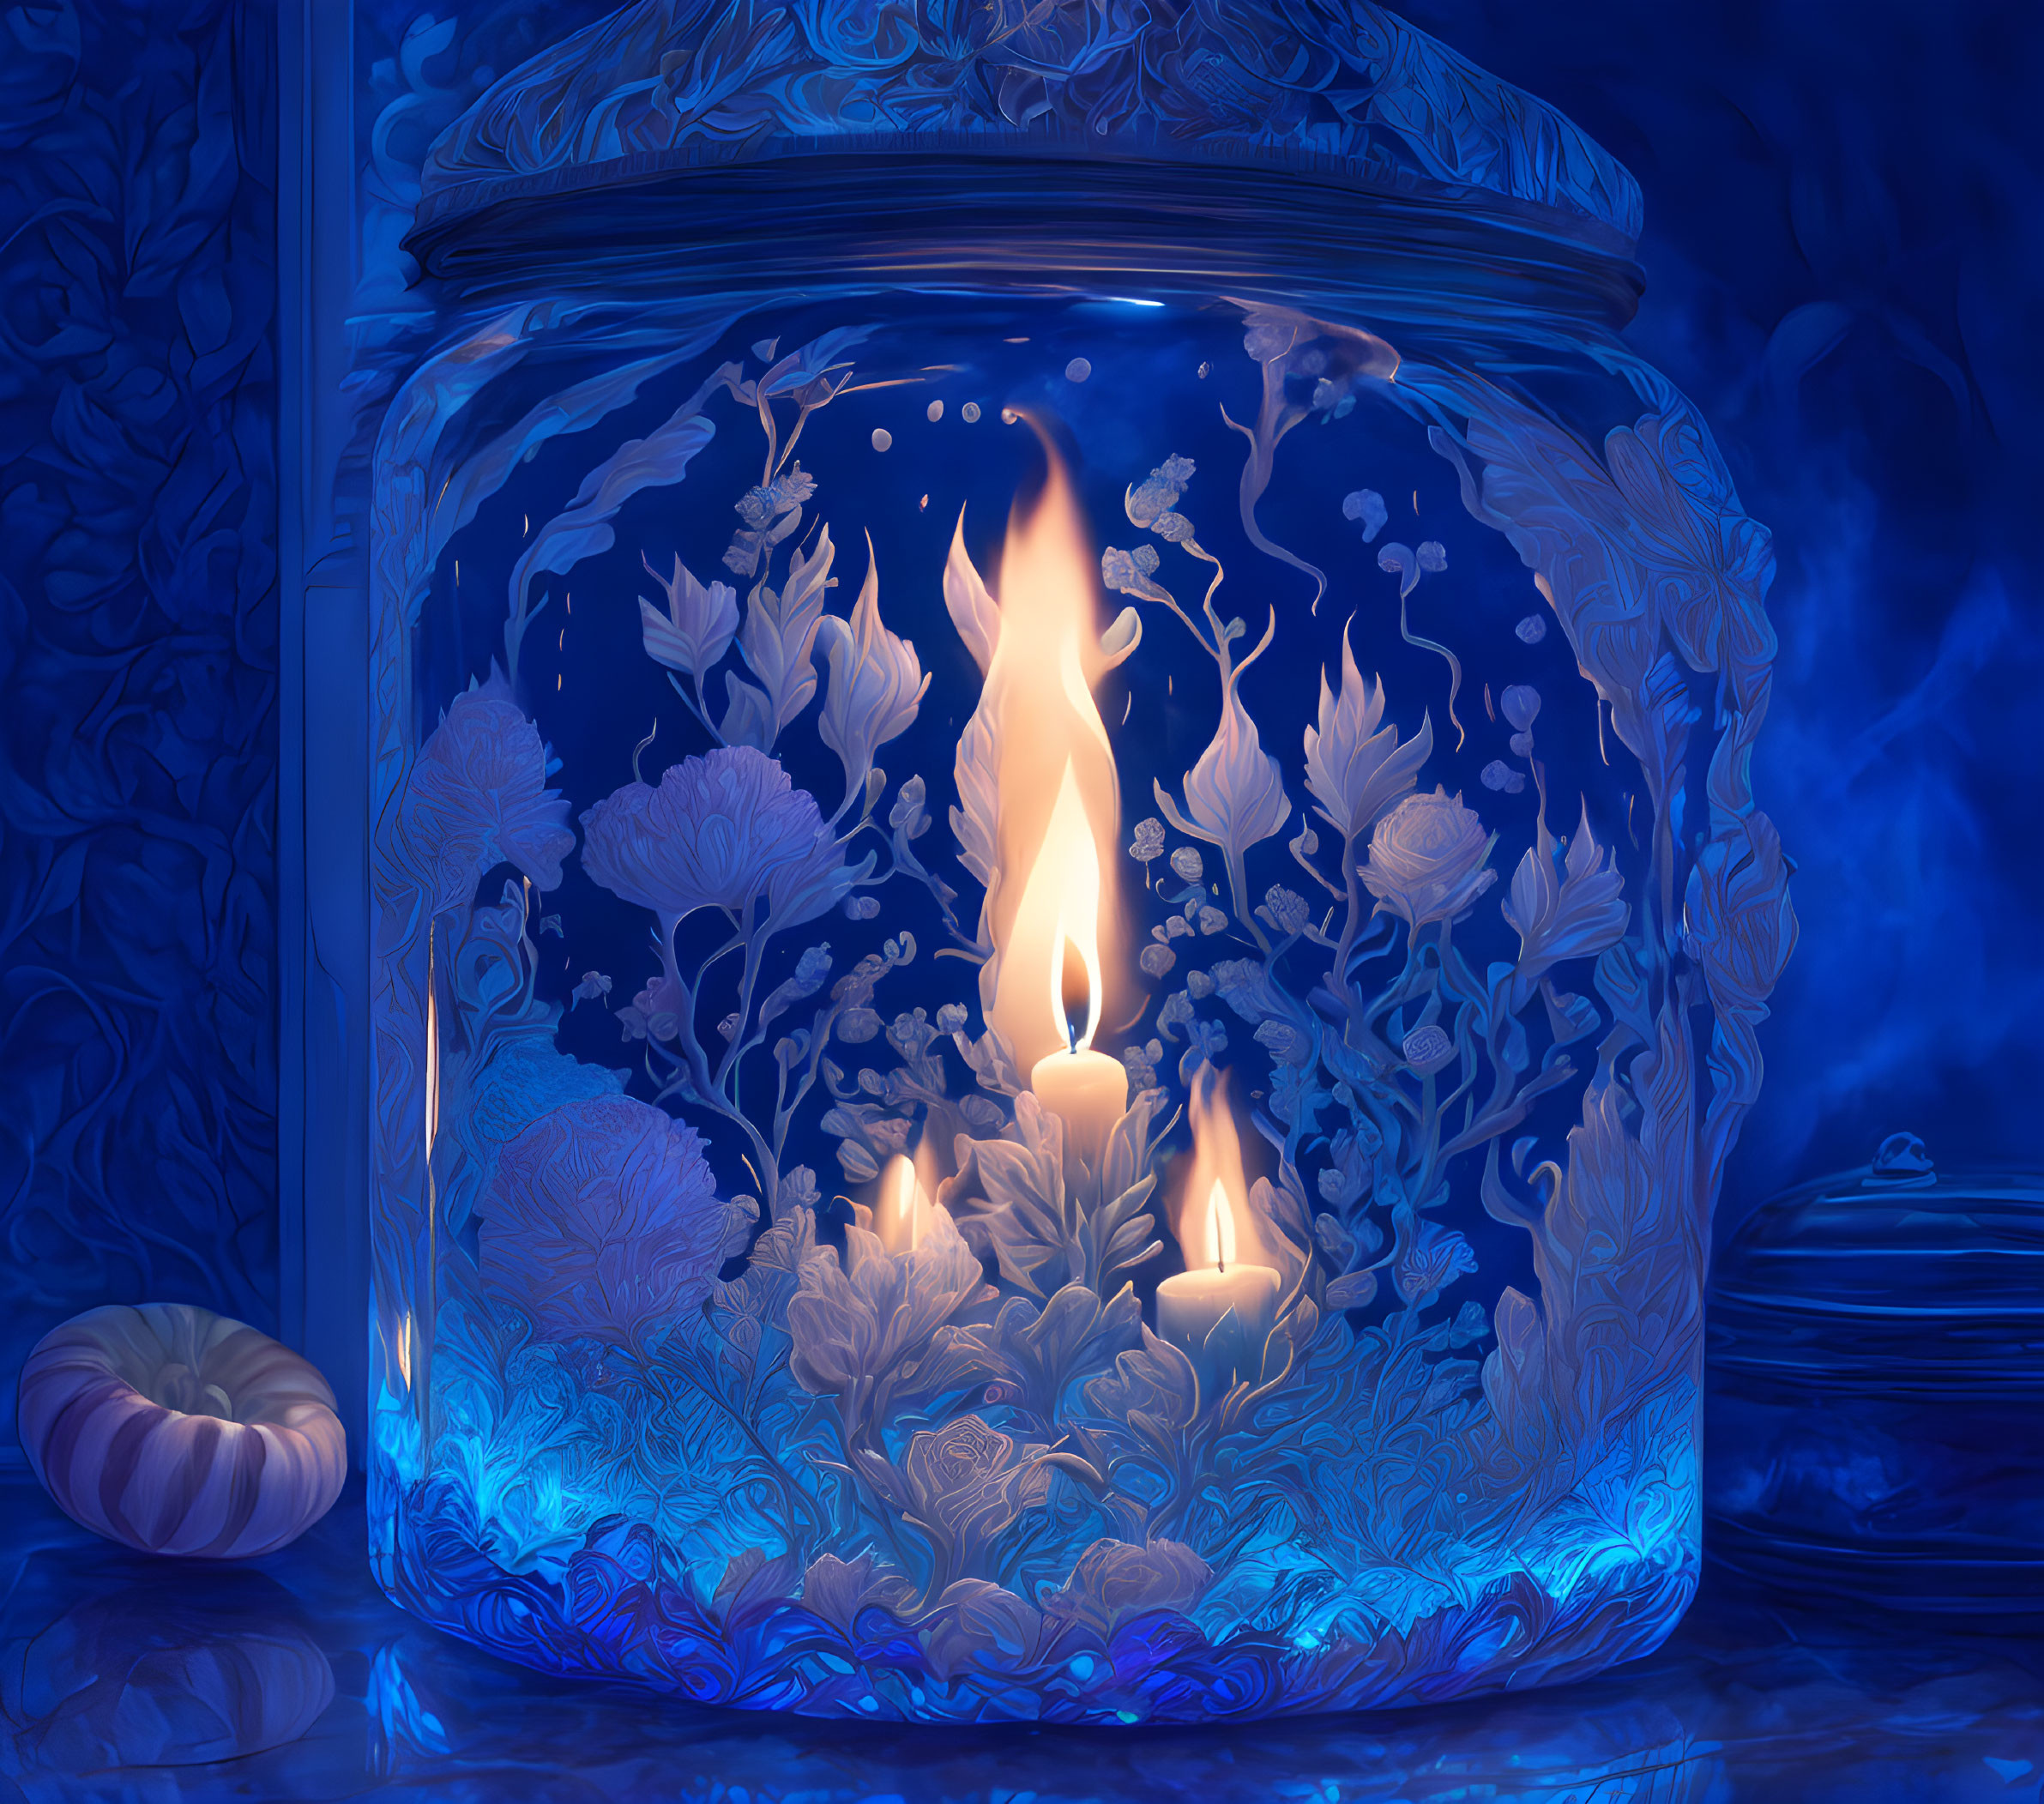  A burning candle